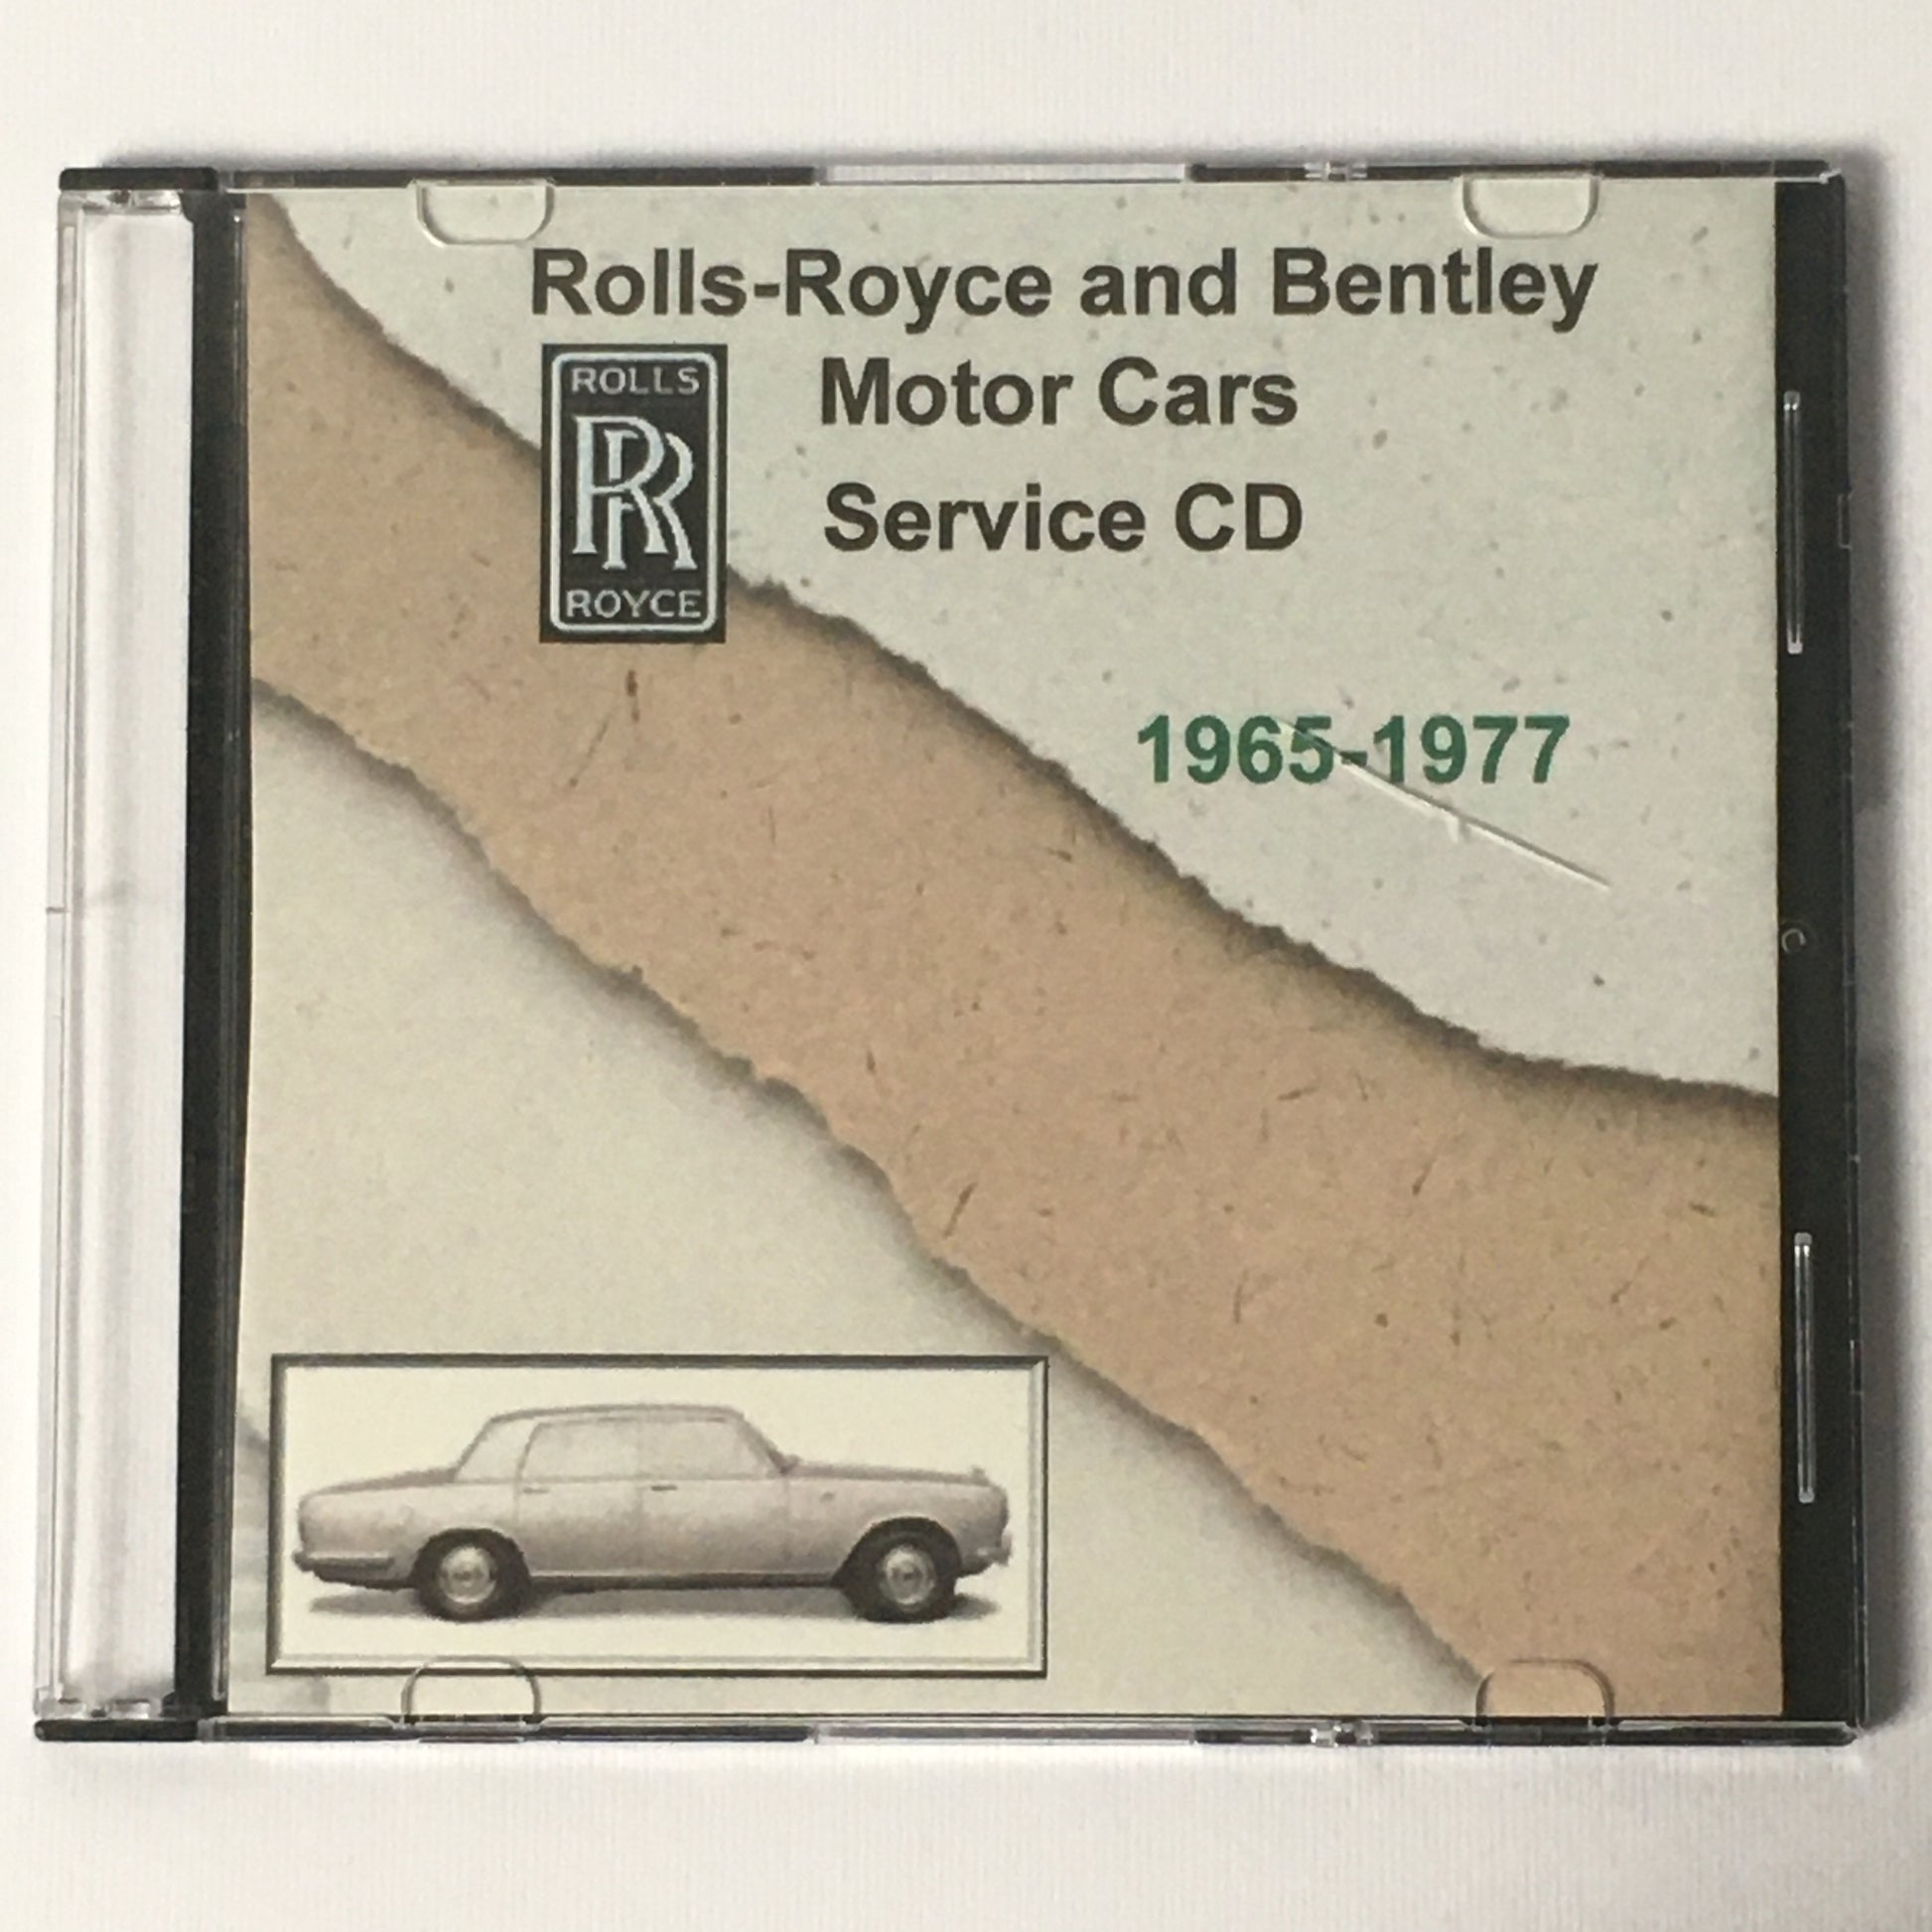 Rolls-Royce e Bentley, Service Cd per Vetture Rolls-Royce e Bentley prodotte dal 1965 al 1977 - Raggi's Collectibles' Automotive Art